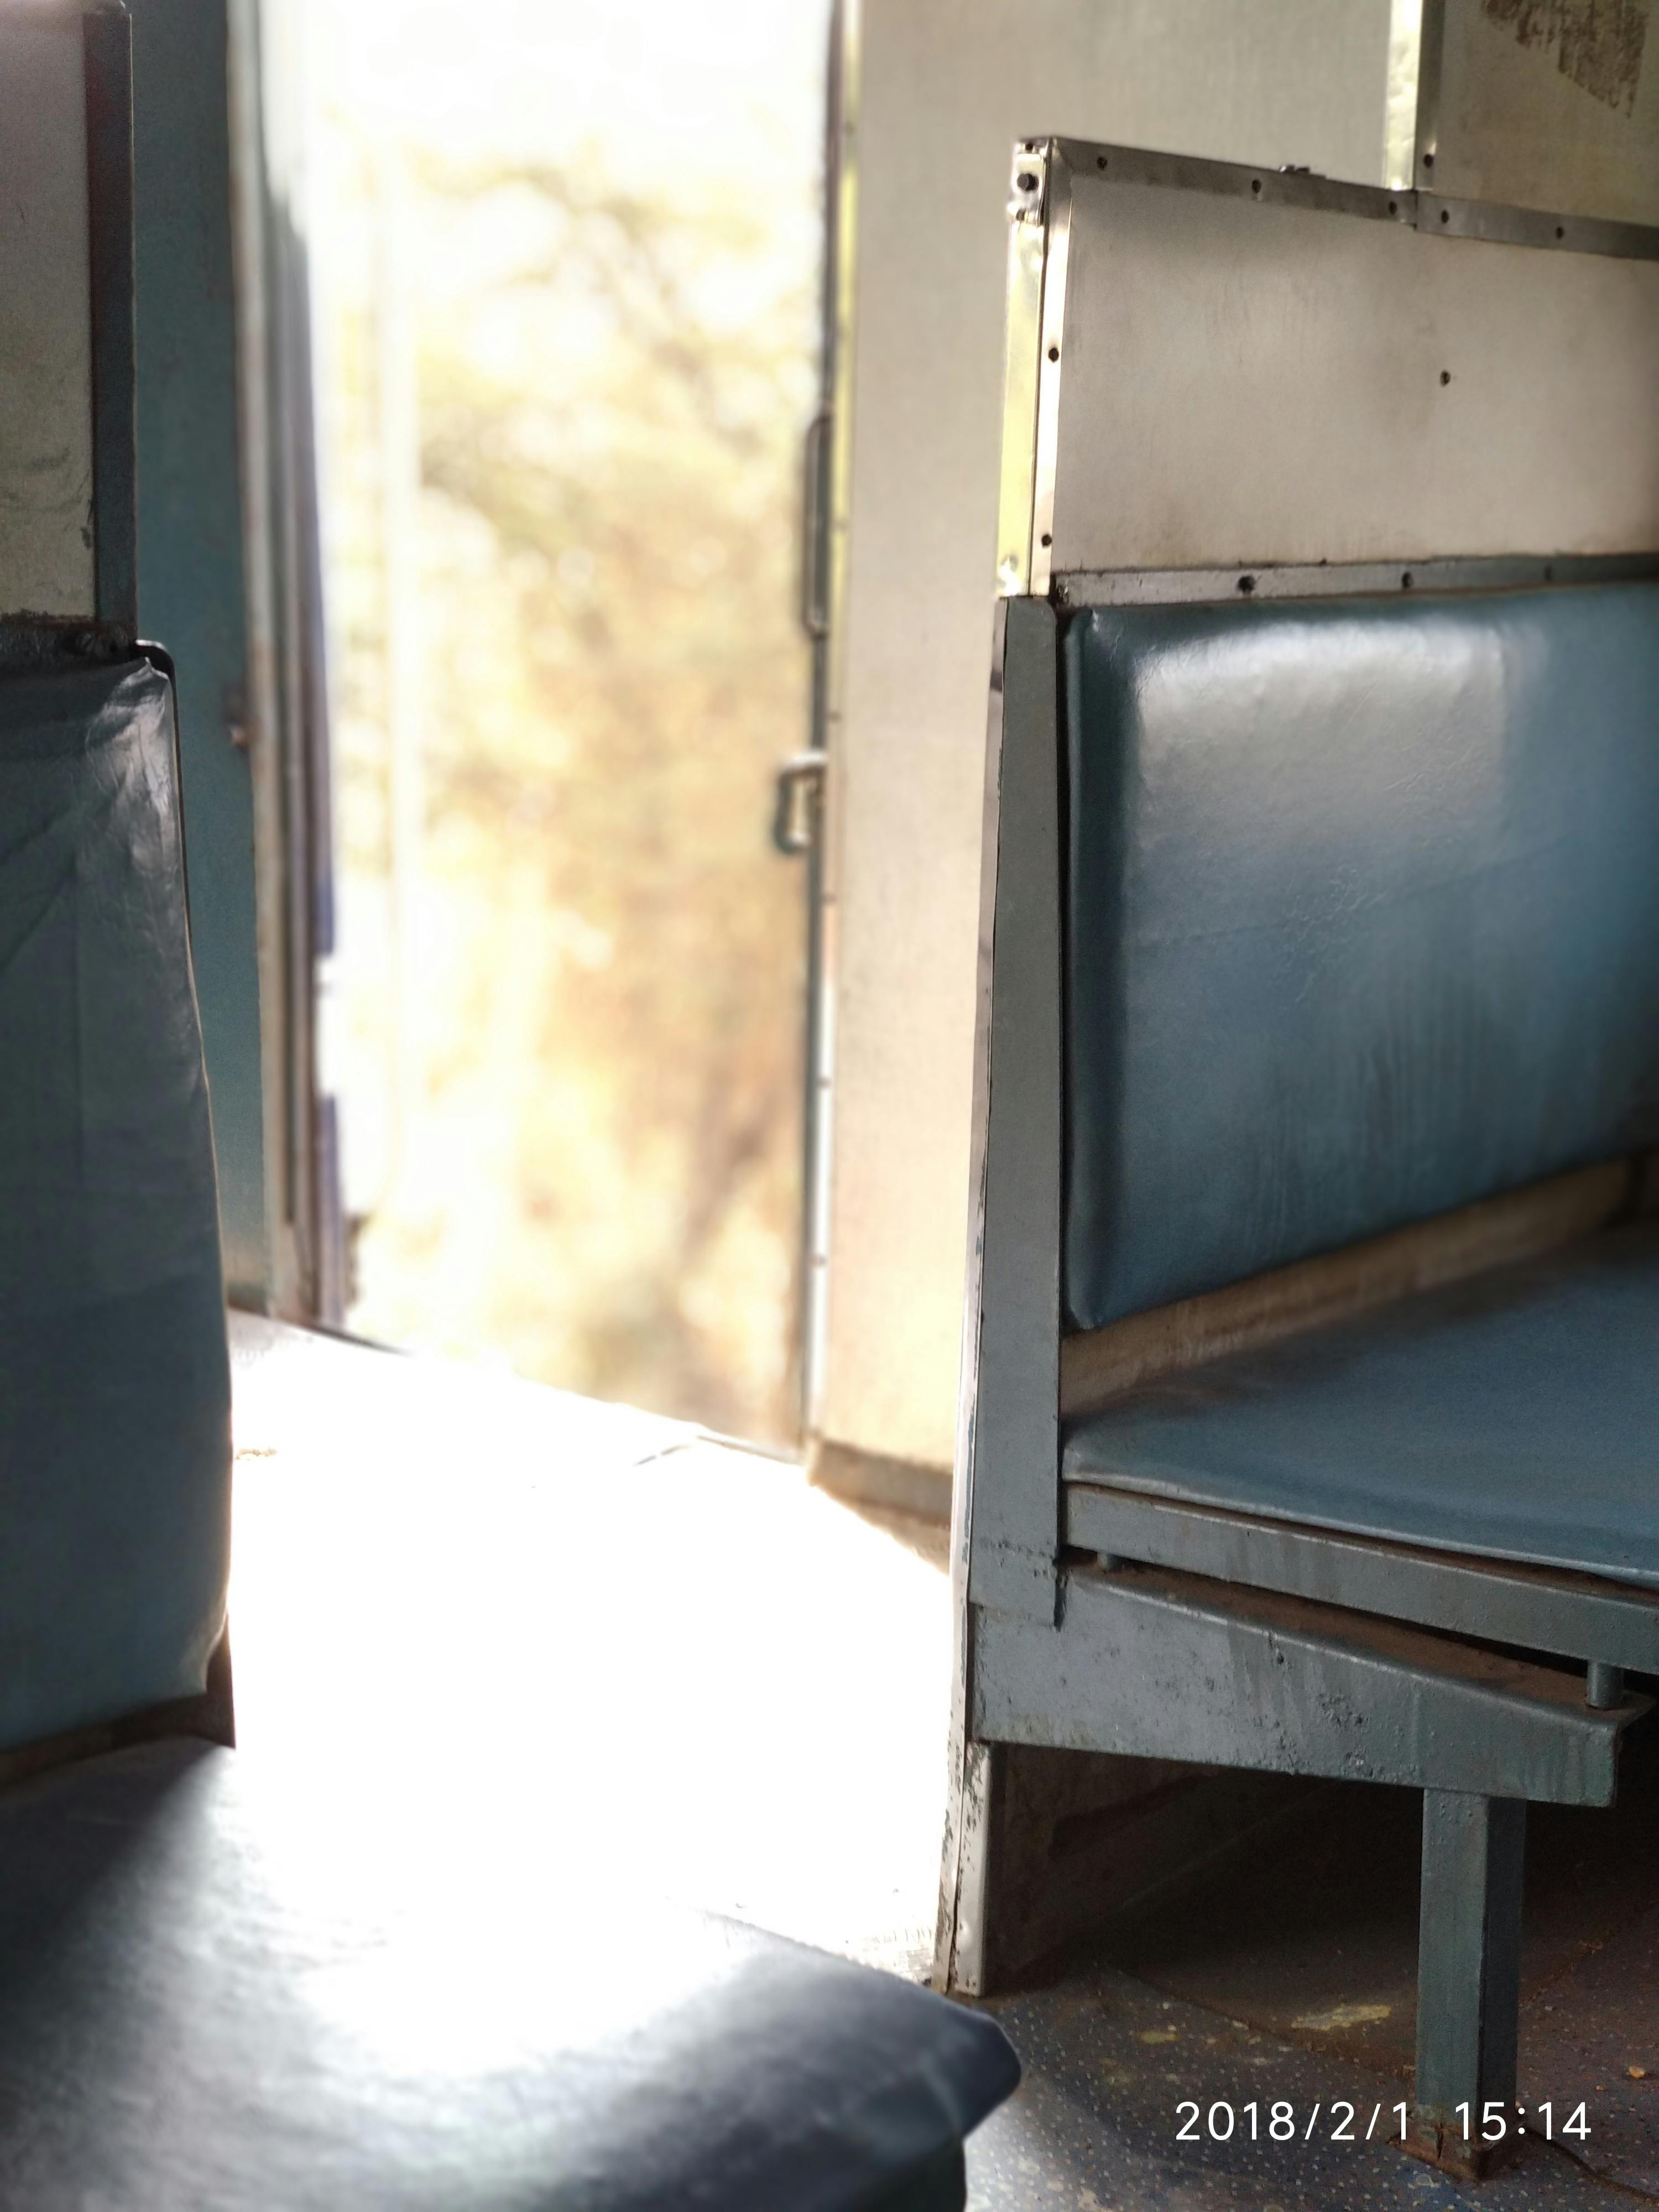 Free stock photo of #mobilechallenge, Train compartment